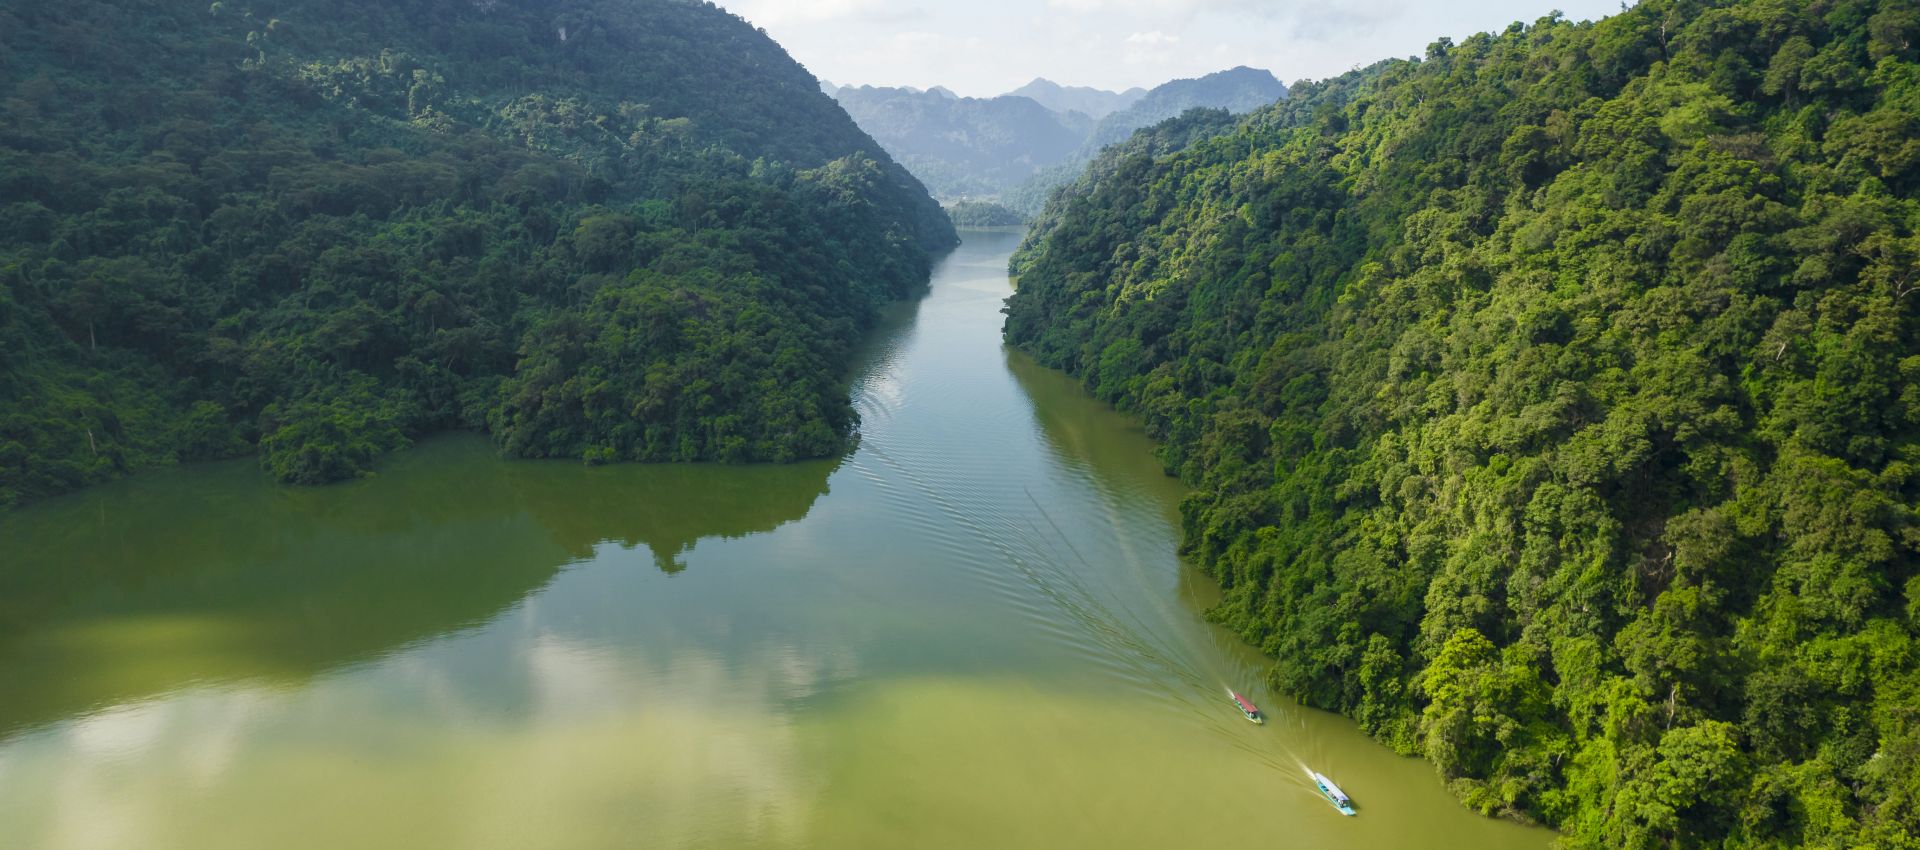 Vietnam Adventure Tour - 3 Day Escape To Ba Bể Lake